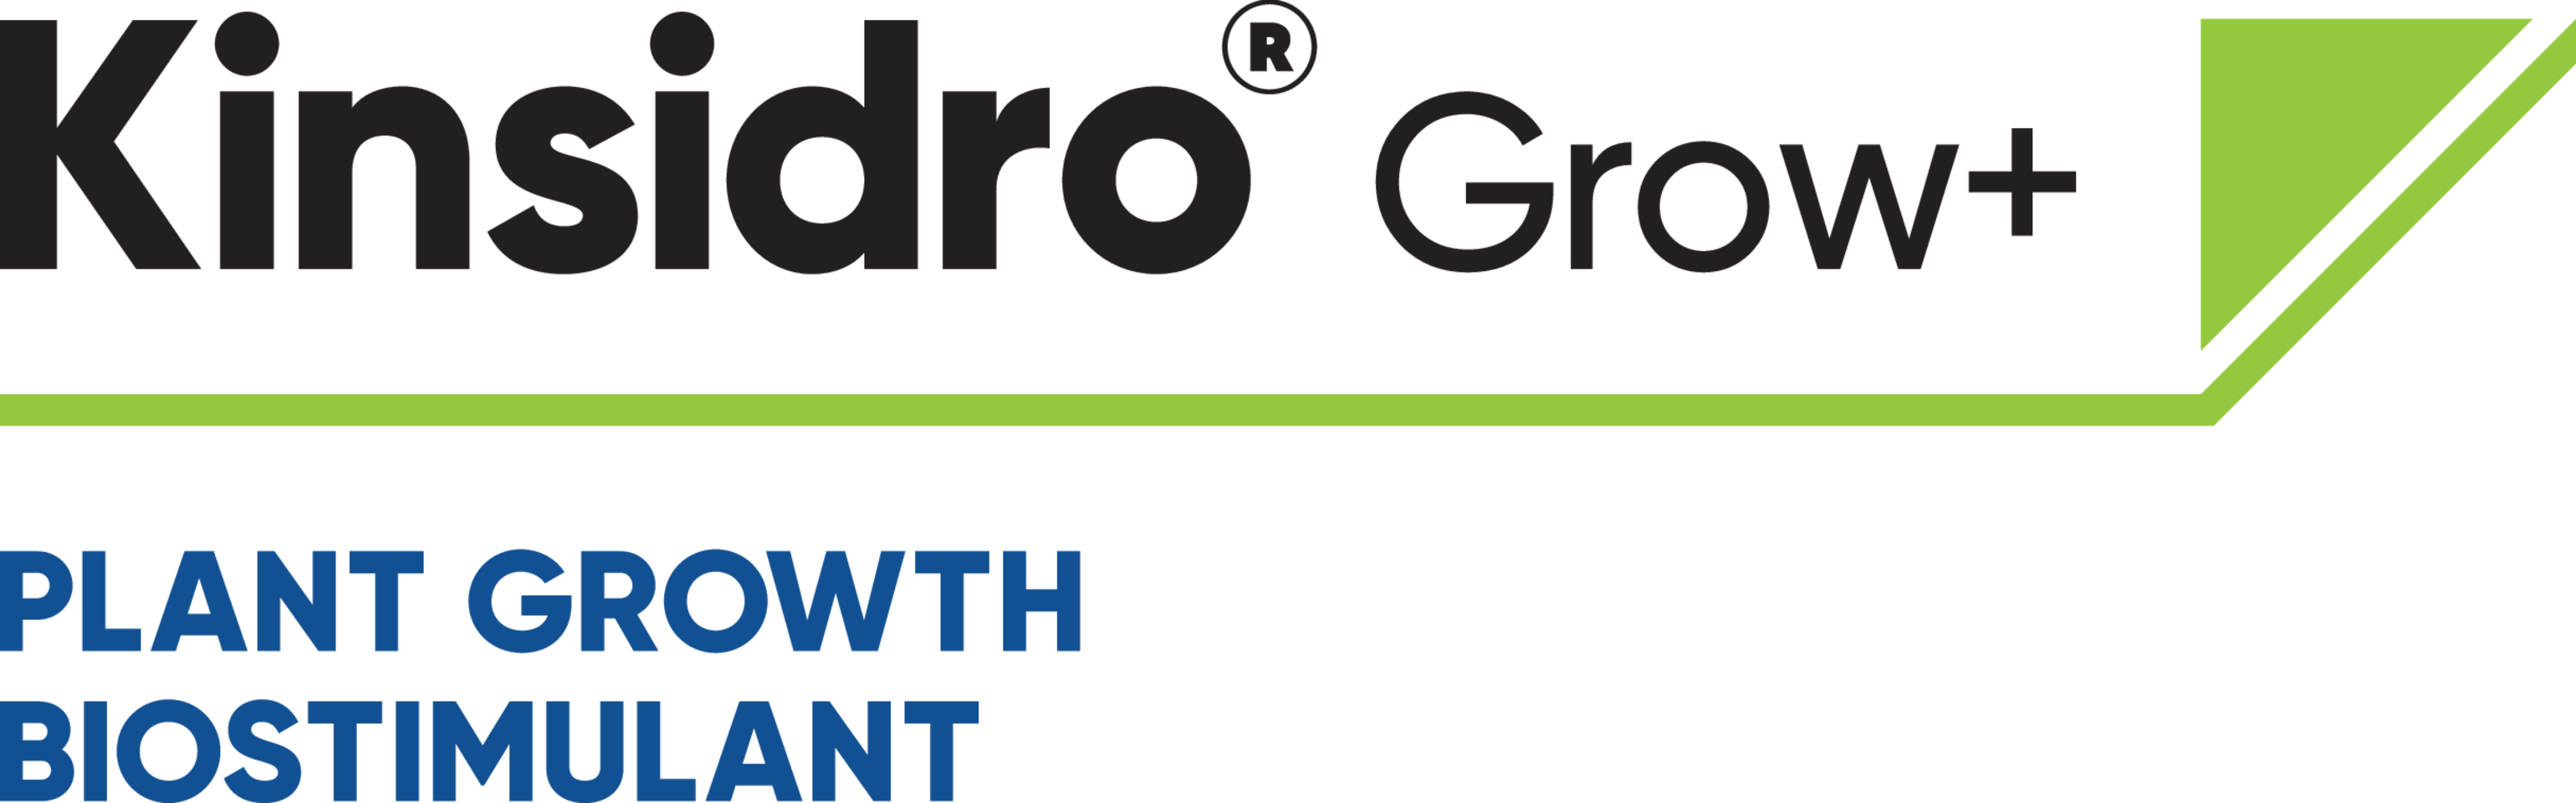 Kinsidro Grow+ product logo